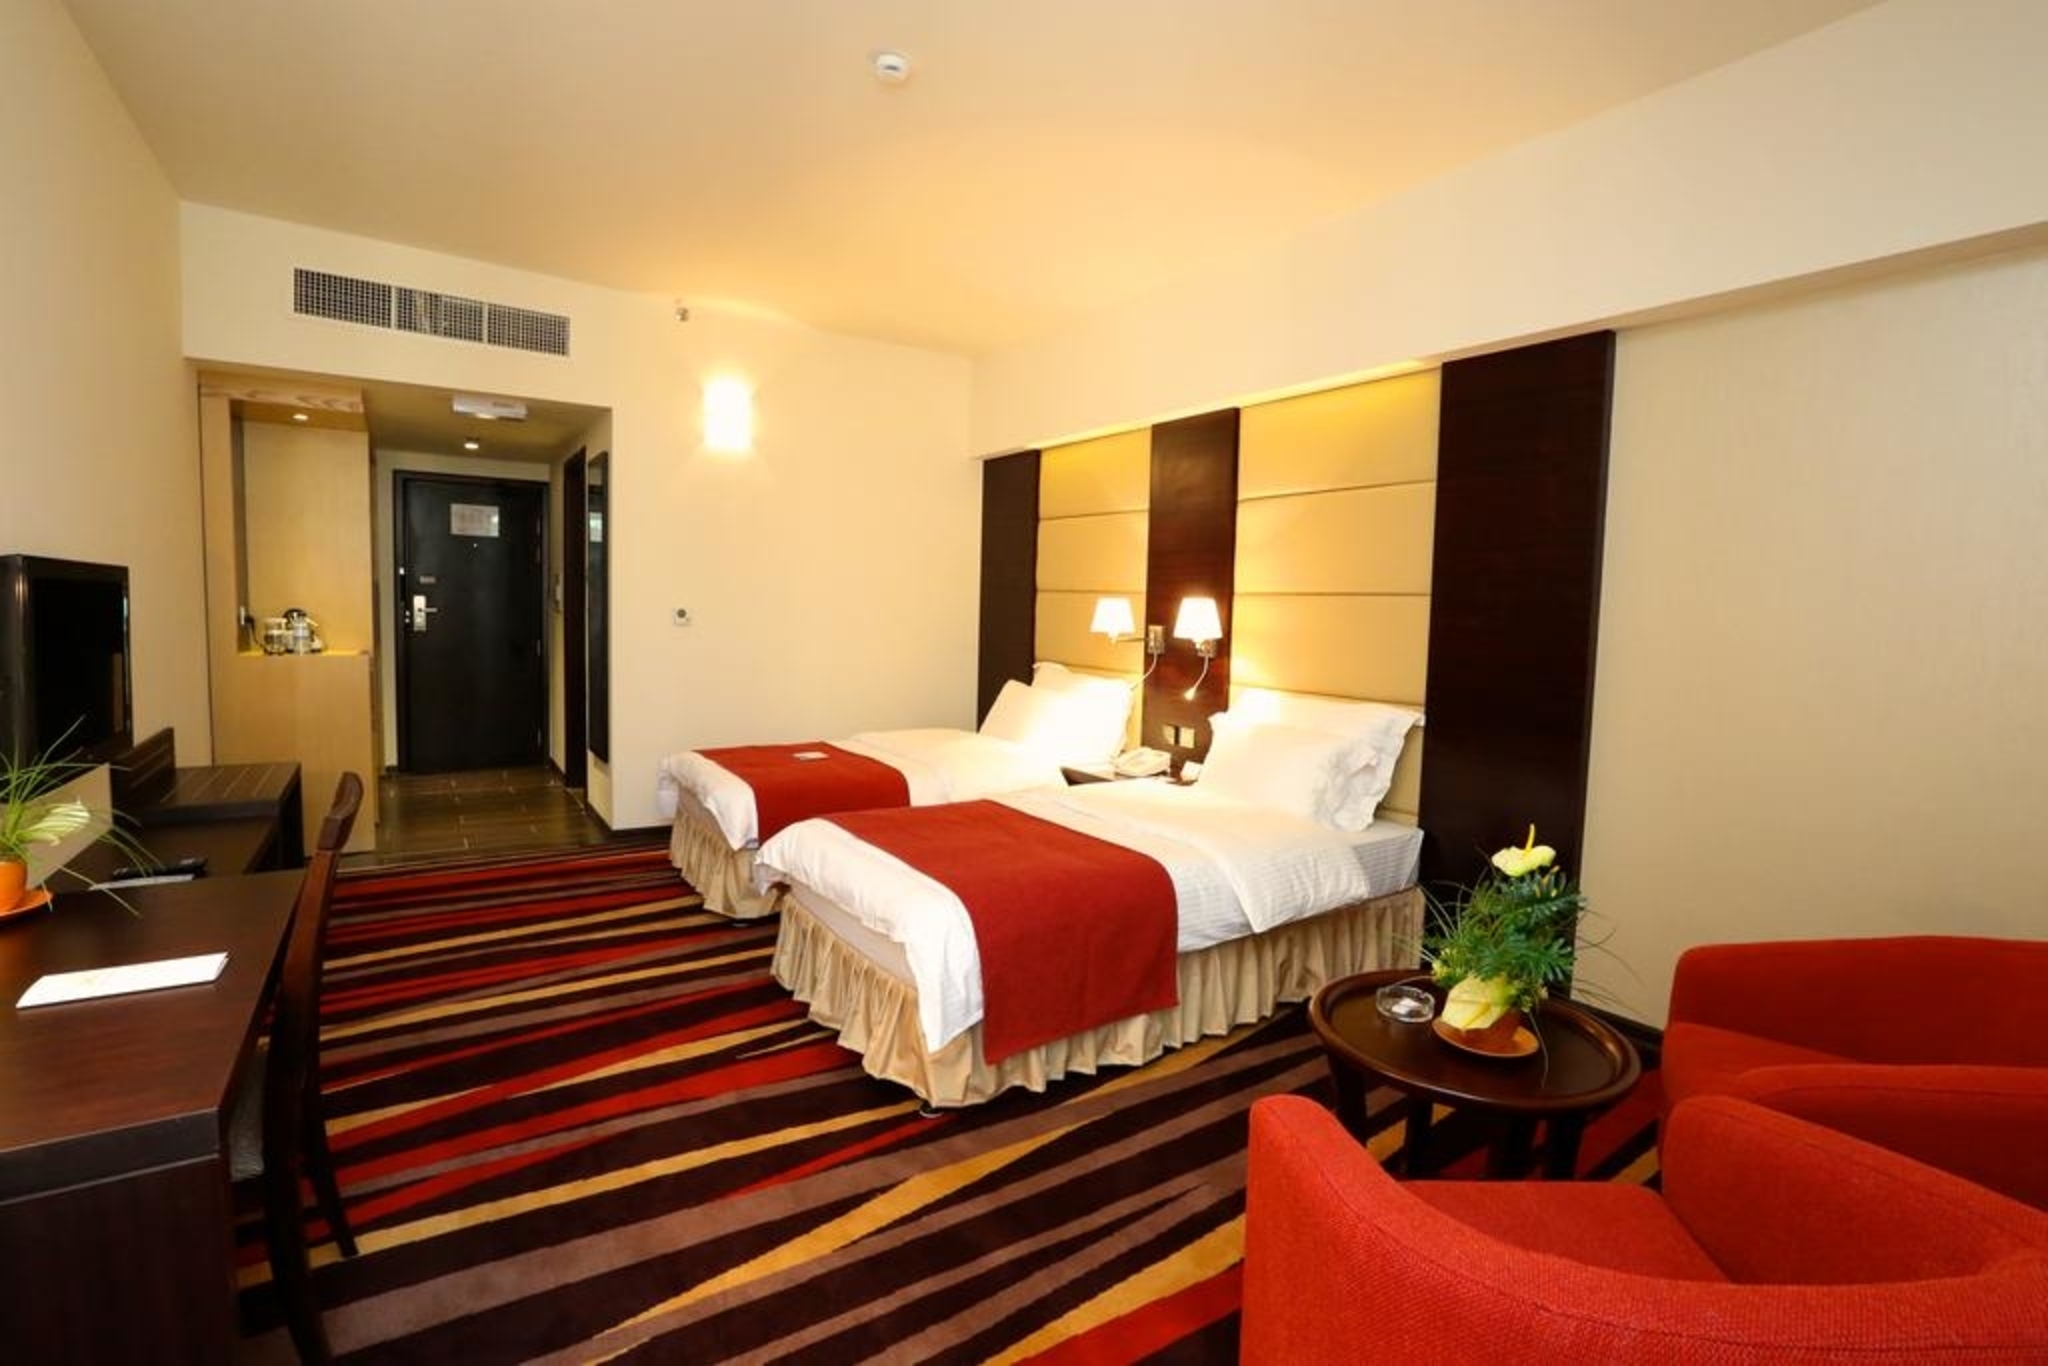 Nehal Hotel by Bin Majid Hotels & Resorts